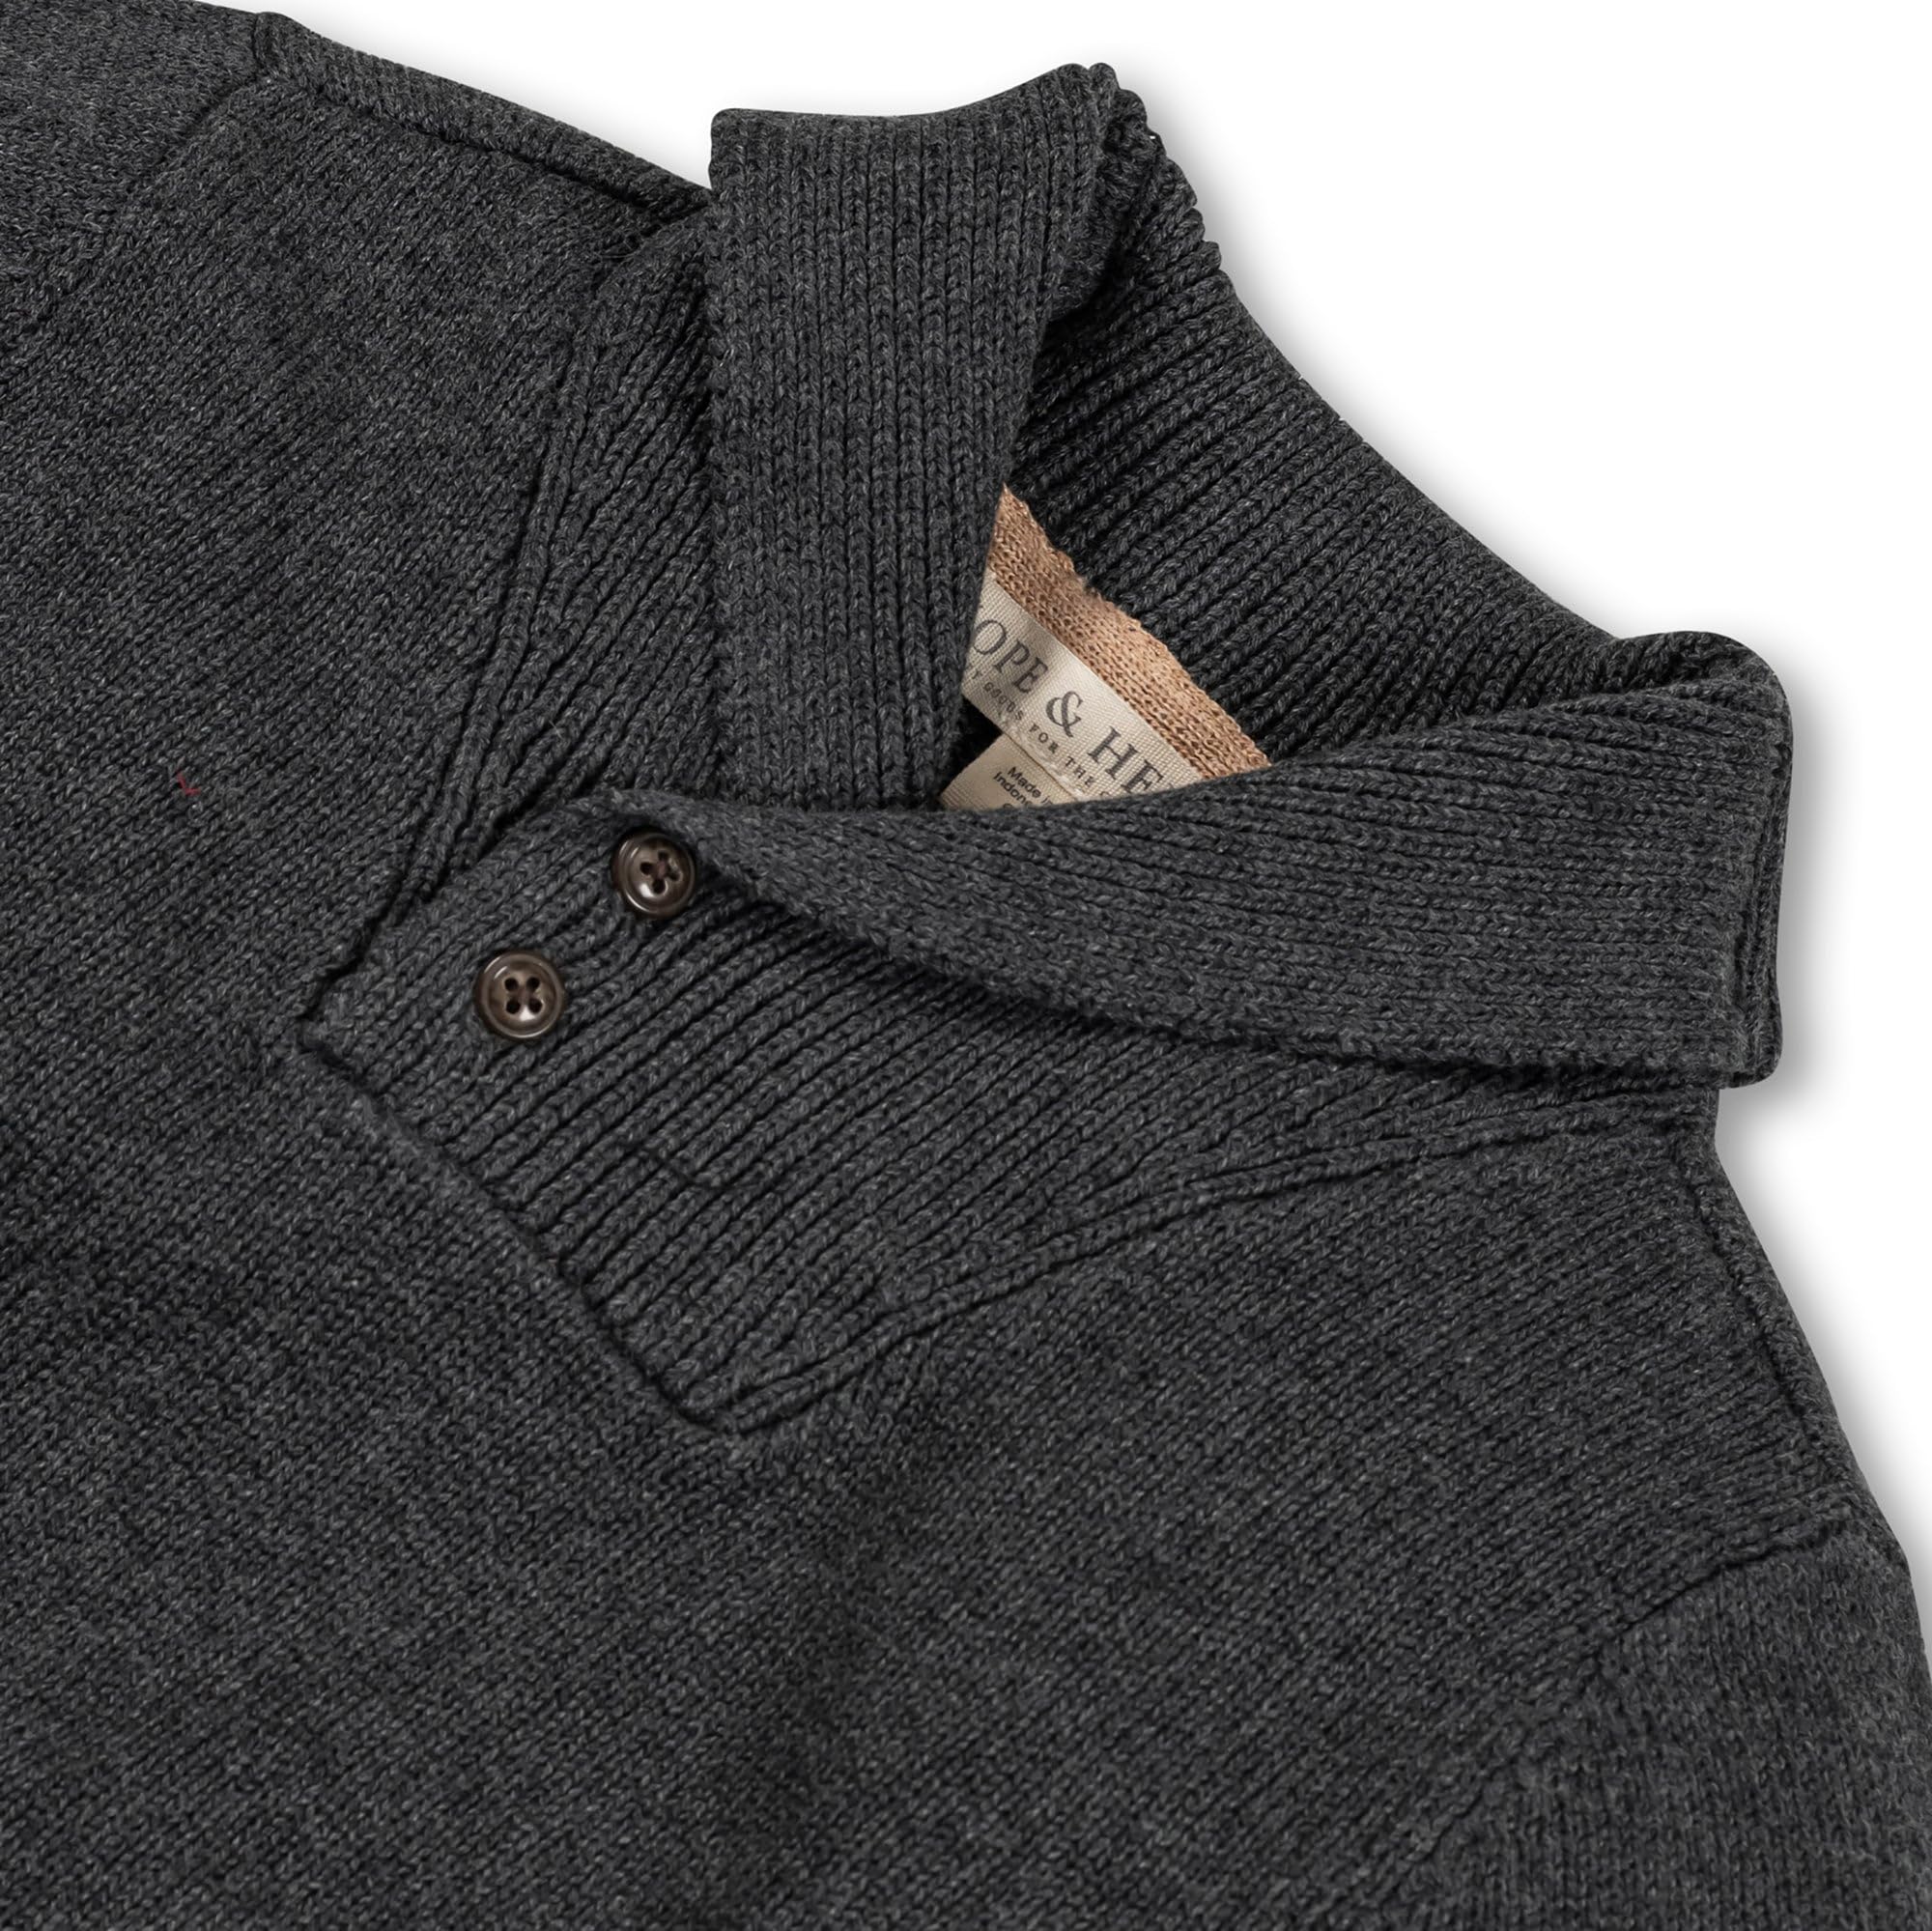 Hope & Henry Boys' Long Sleeve Shawl Collar Sweater